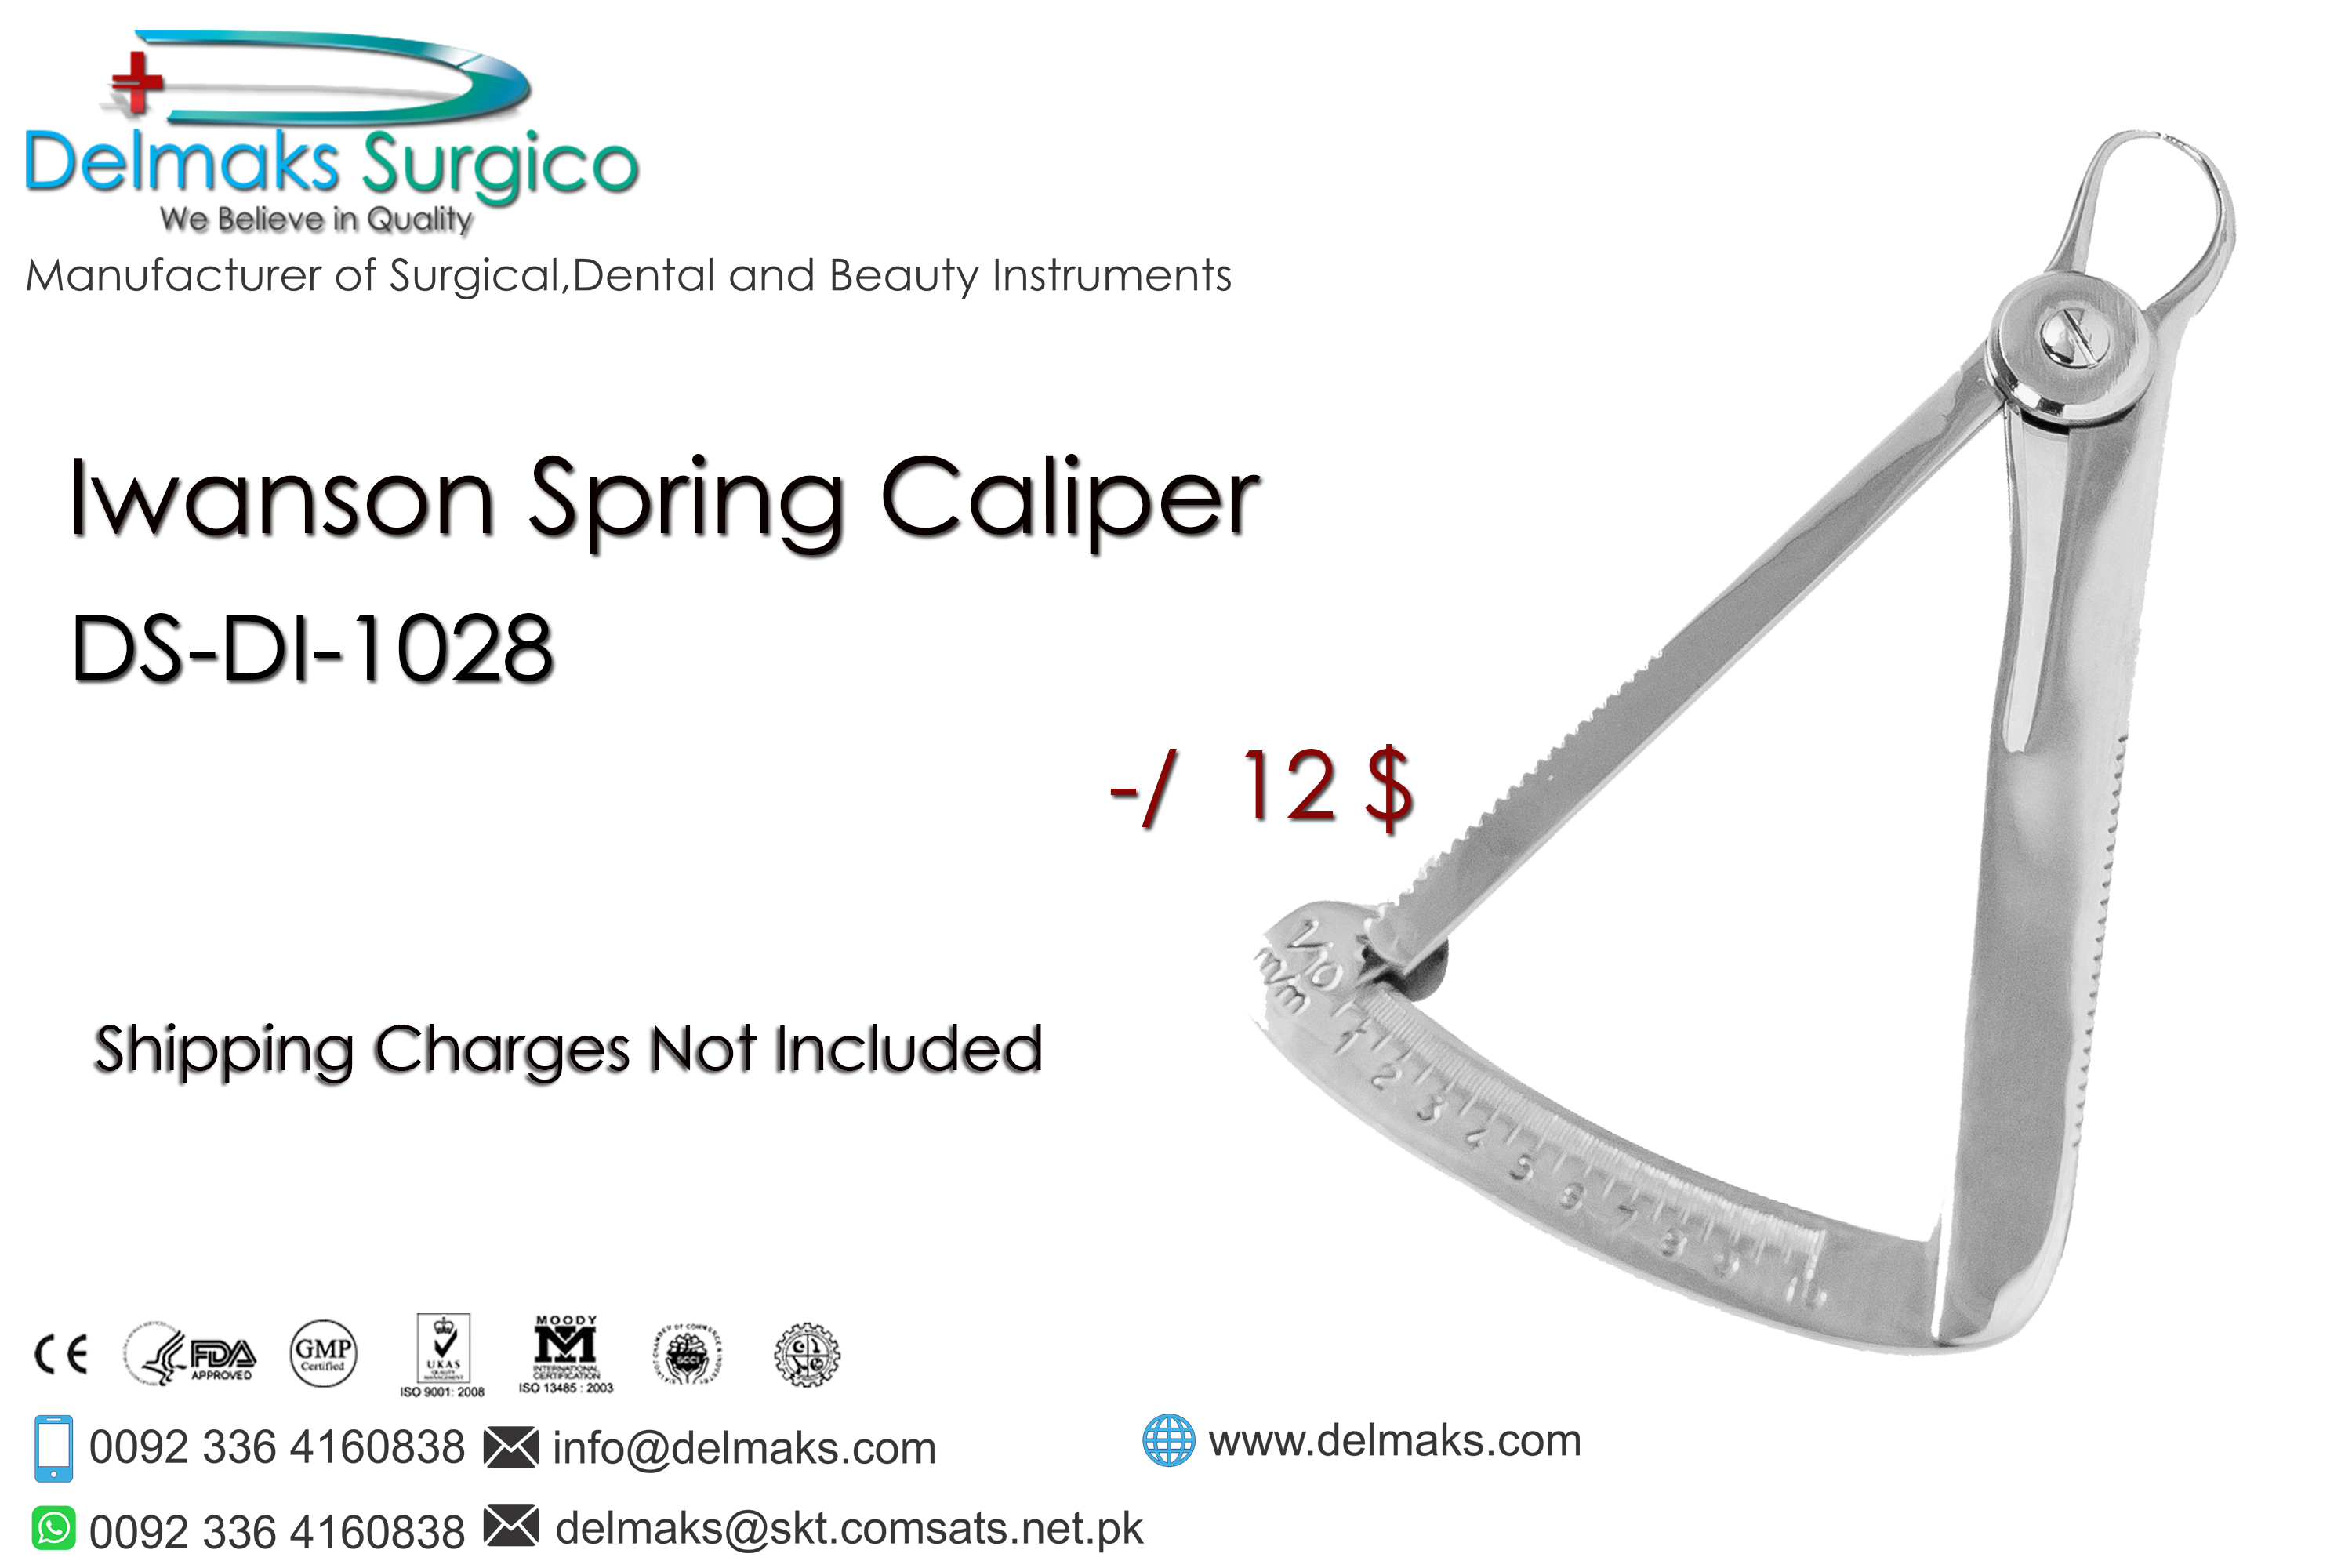 Iwanson Spring Caliper-Measuring Instruments-Orthodontic-Dental Instruments-Delmaks Surgico